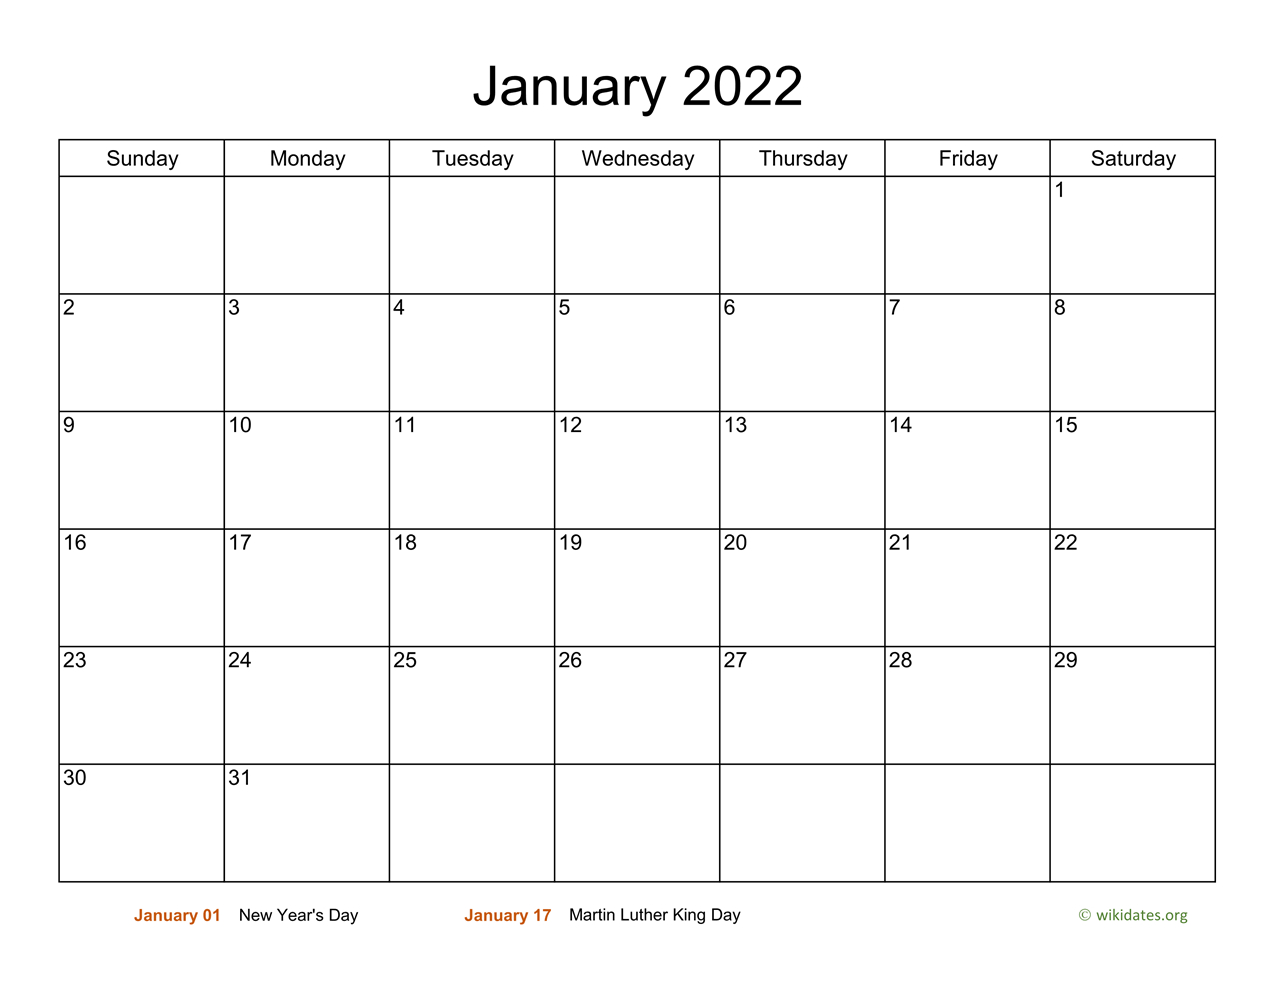 Basic Calendar For January 2022 | Wikidates